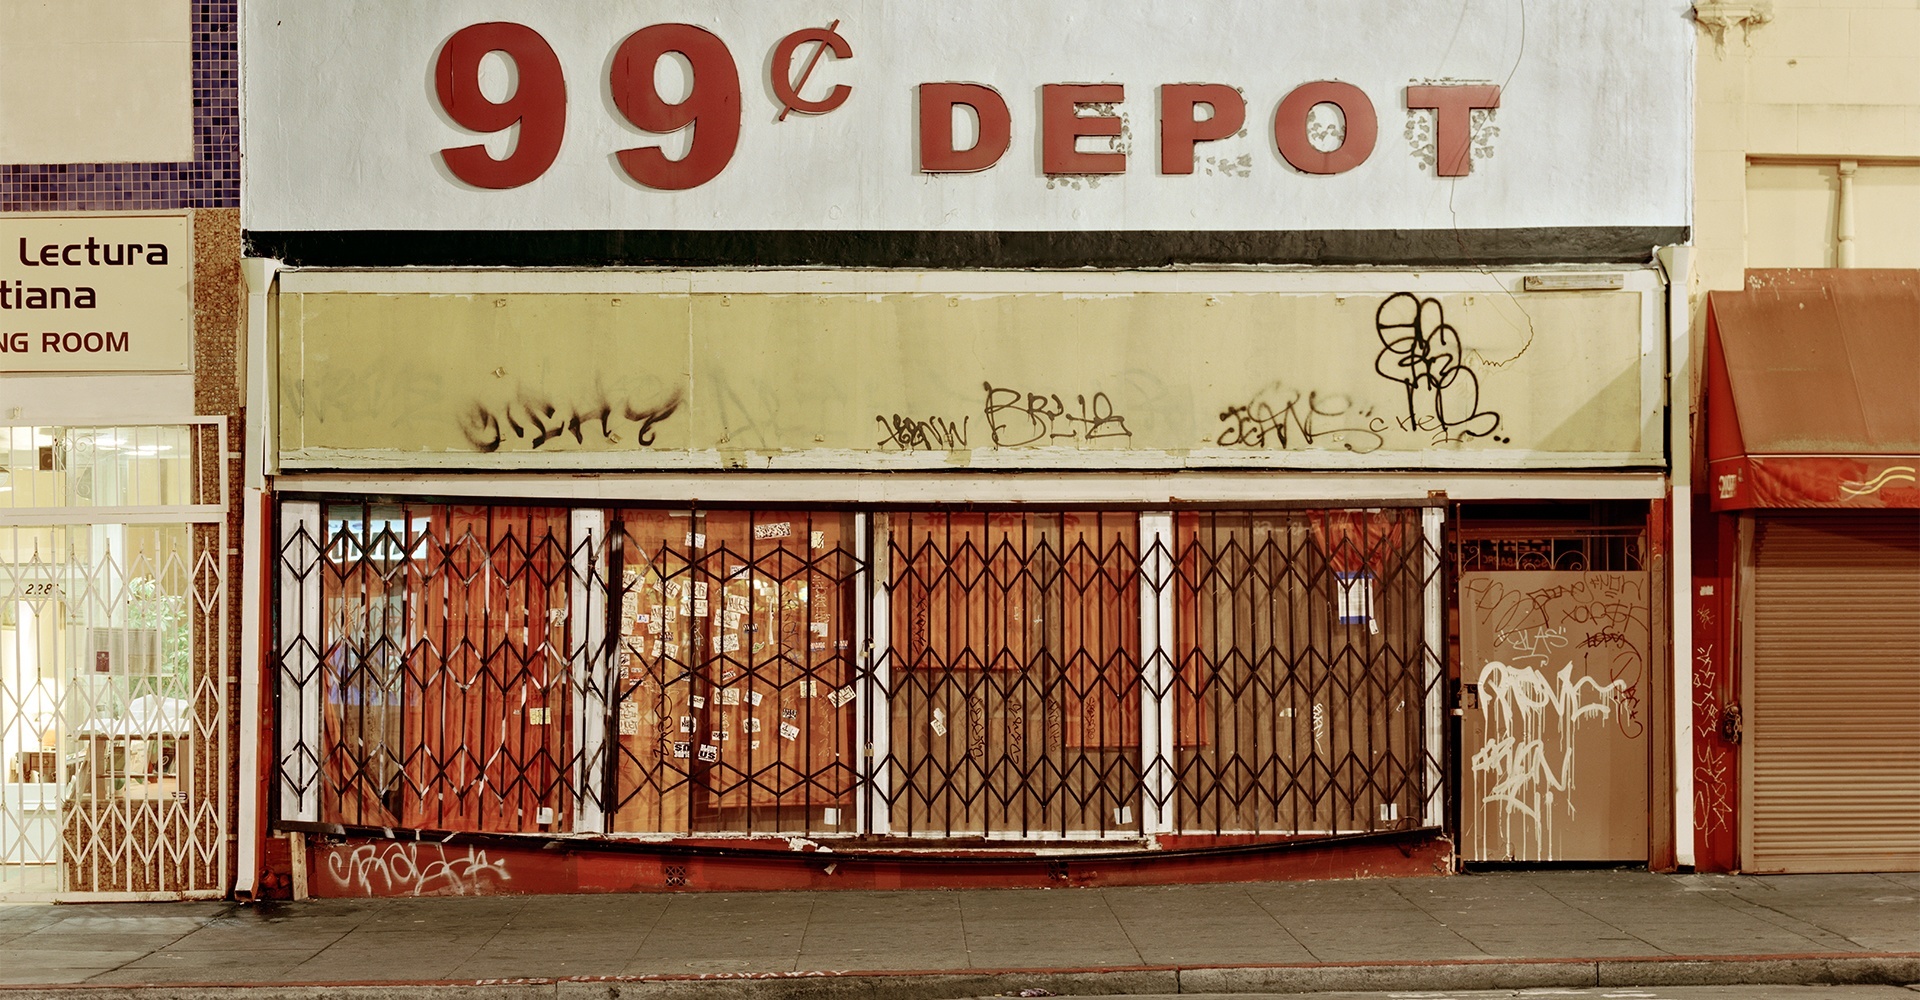 99 Cent Depot, San Francisco, 2010